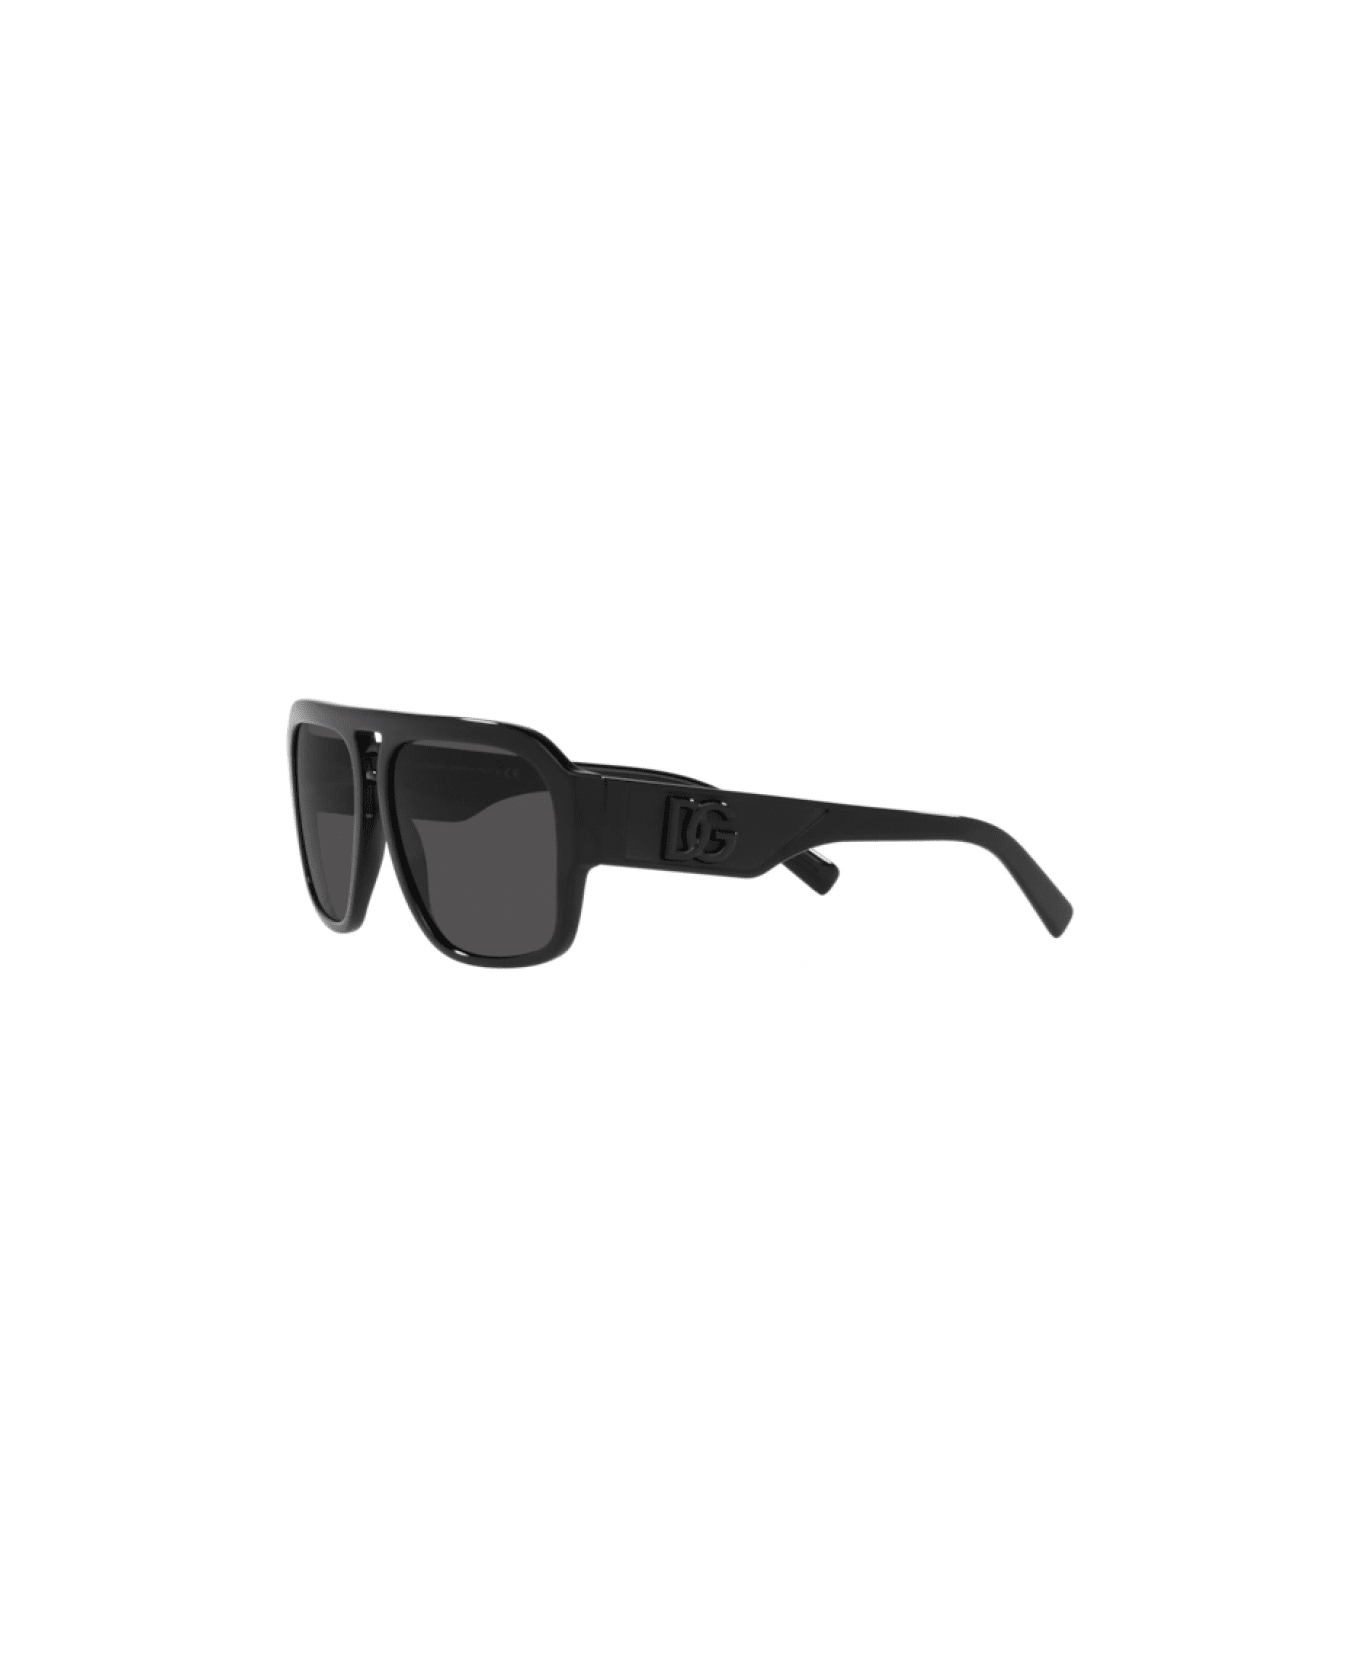 Bliz Glasses Sunglasses Eyewear DG4403 501/87 Sunglasses